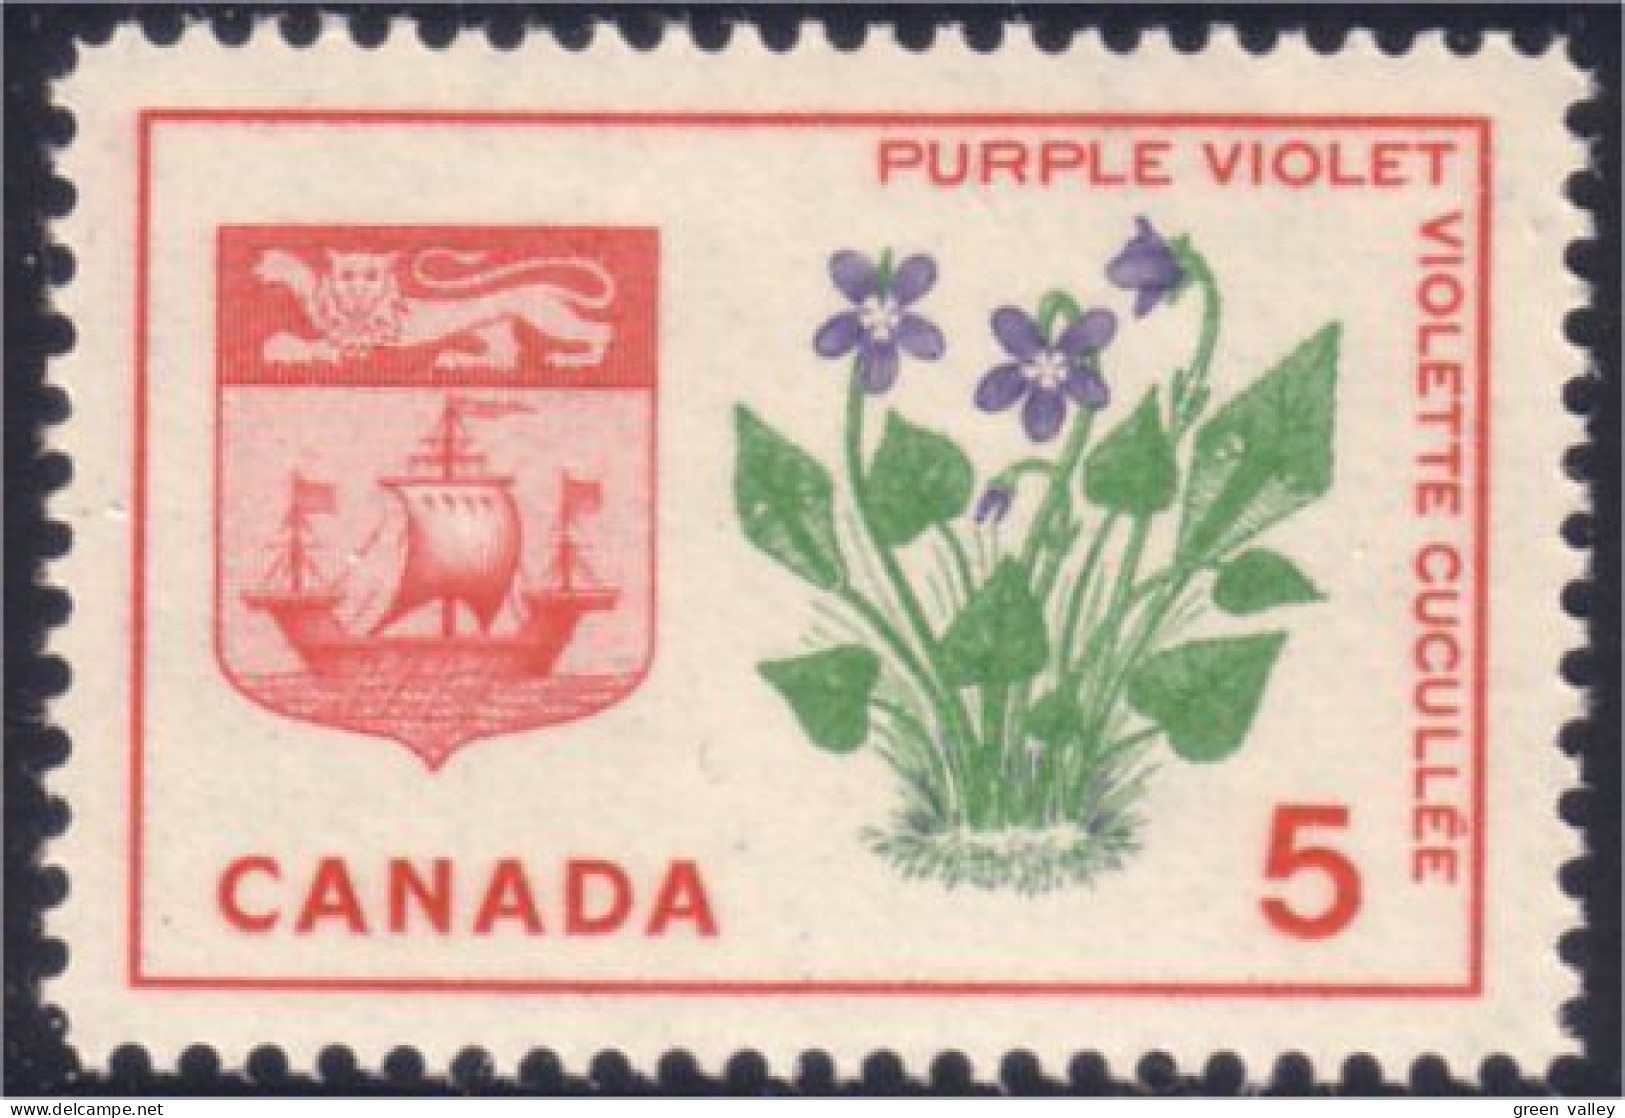 Canada Purple Violet Violette Armoiries Coat Of Arms MNH ** Neuf SC (04-21c) - Francobolli